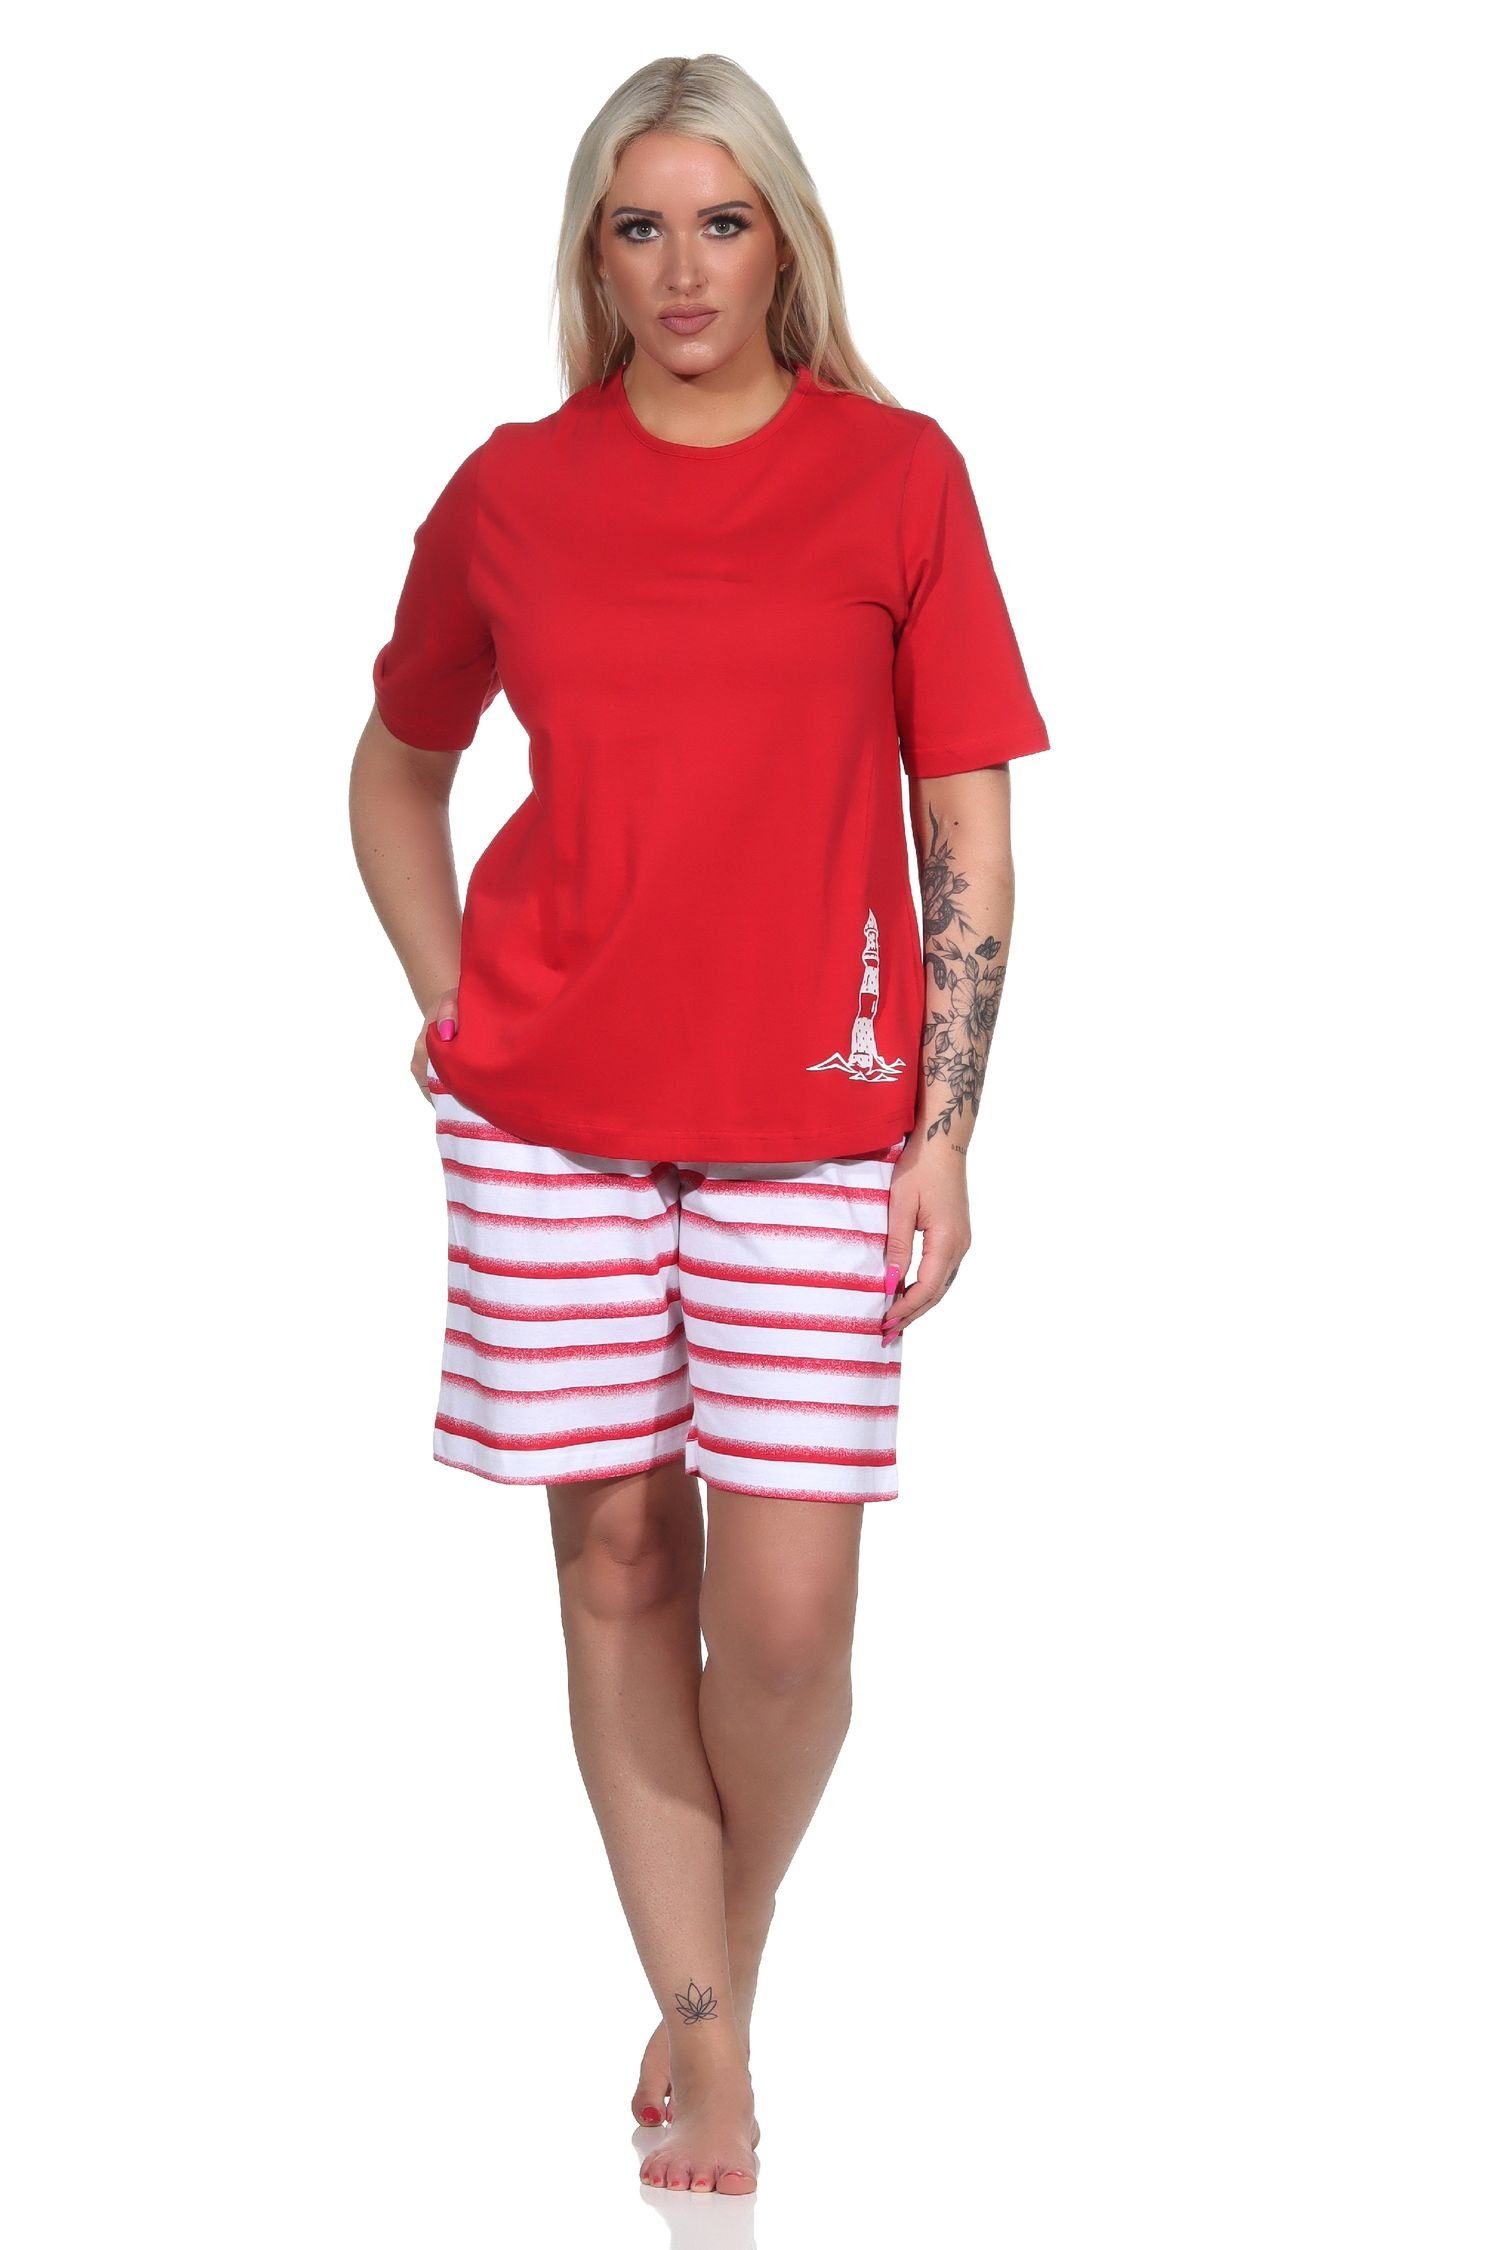 Normann Pyjama Maritimer Damen kurzarm Shorty Schlafanzug, Top mit Leuchturm Motiv rot